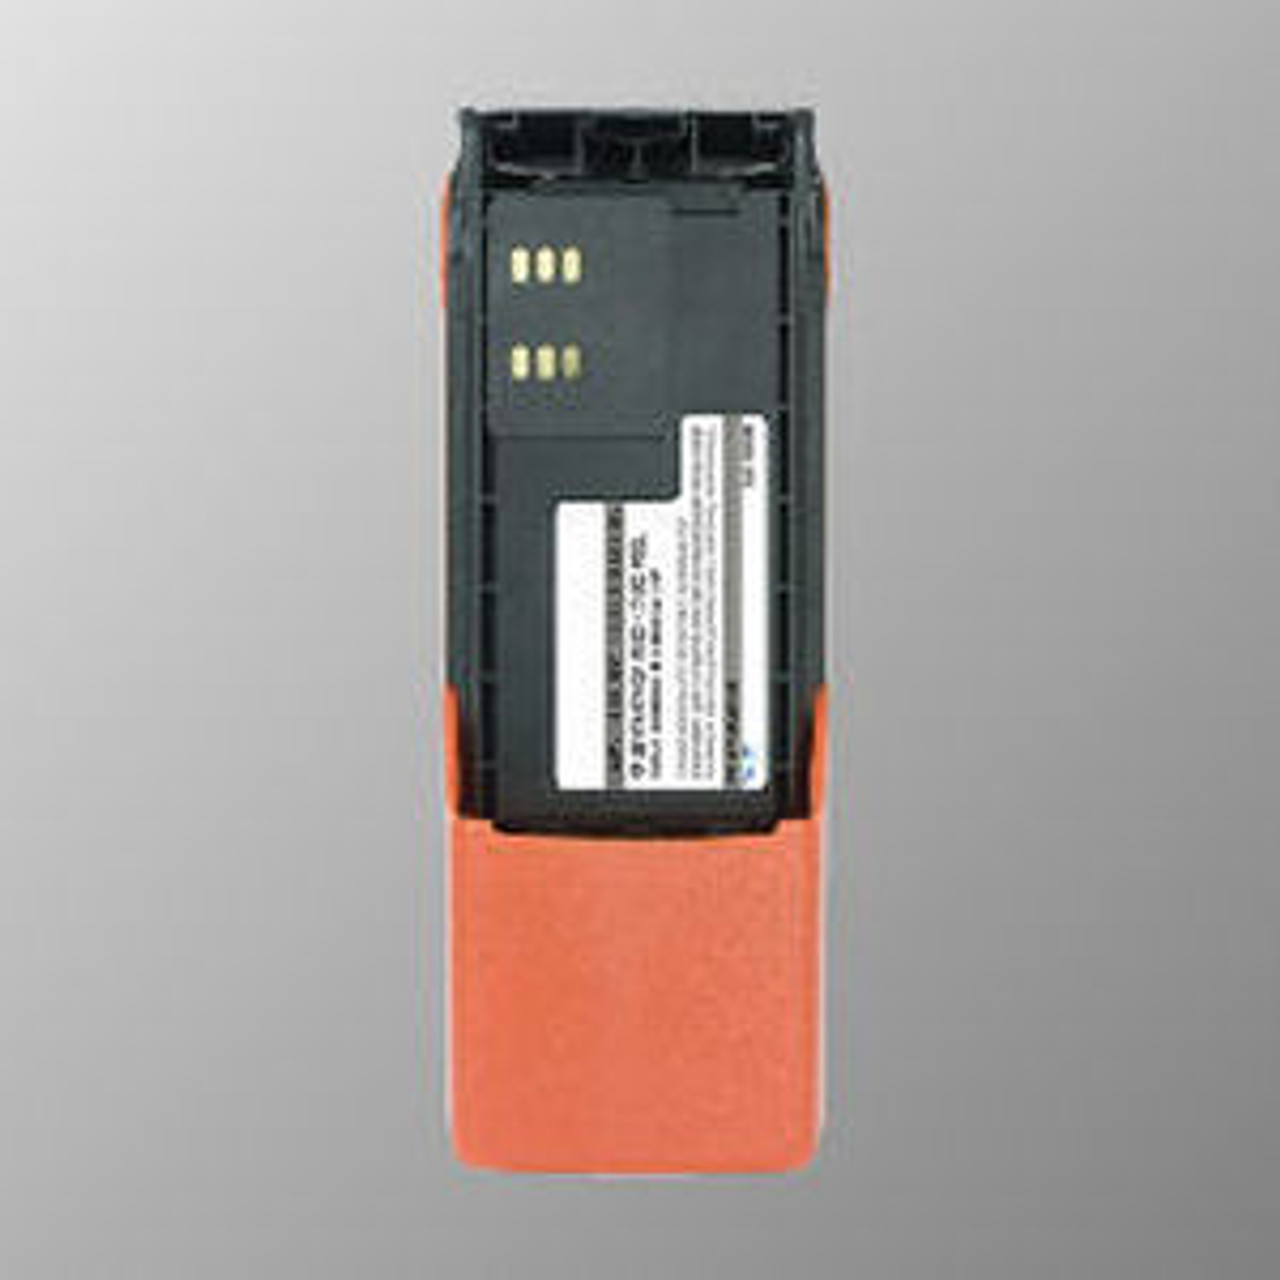 Motorola GP1280 Clamshell - Orange